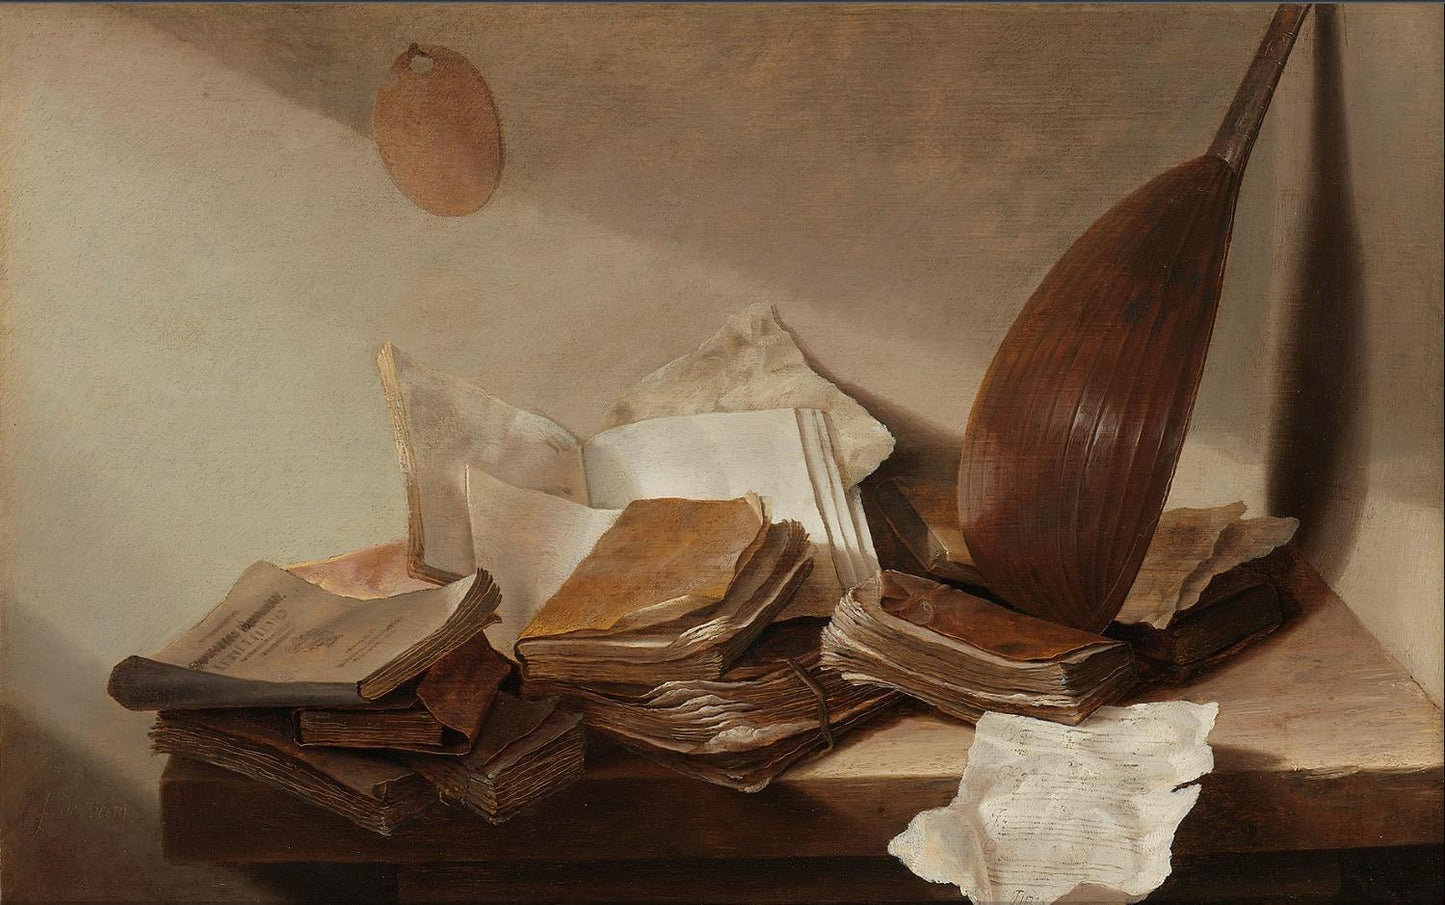 Still life with books and violin, 1628, Jan Davidsz. de Heem